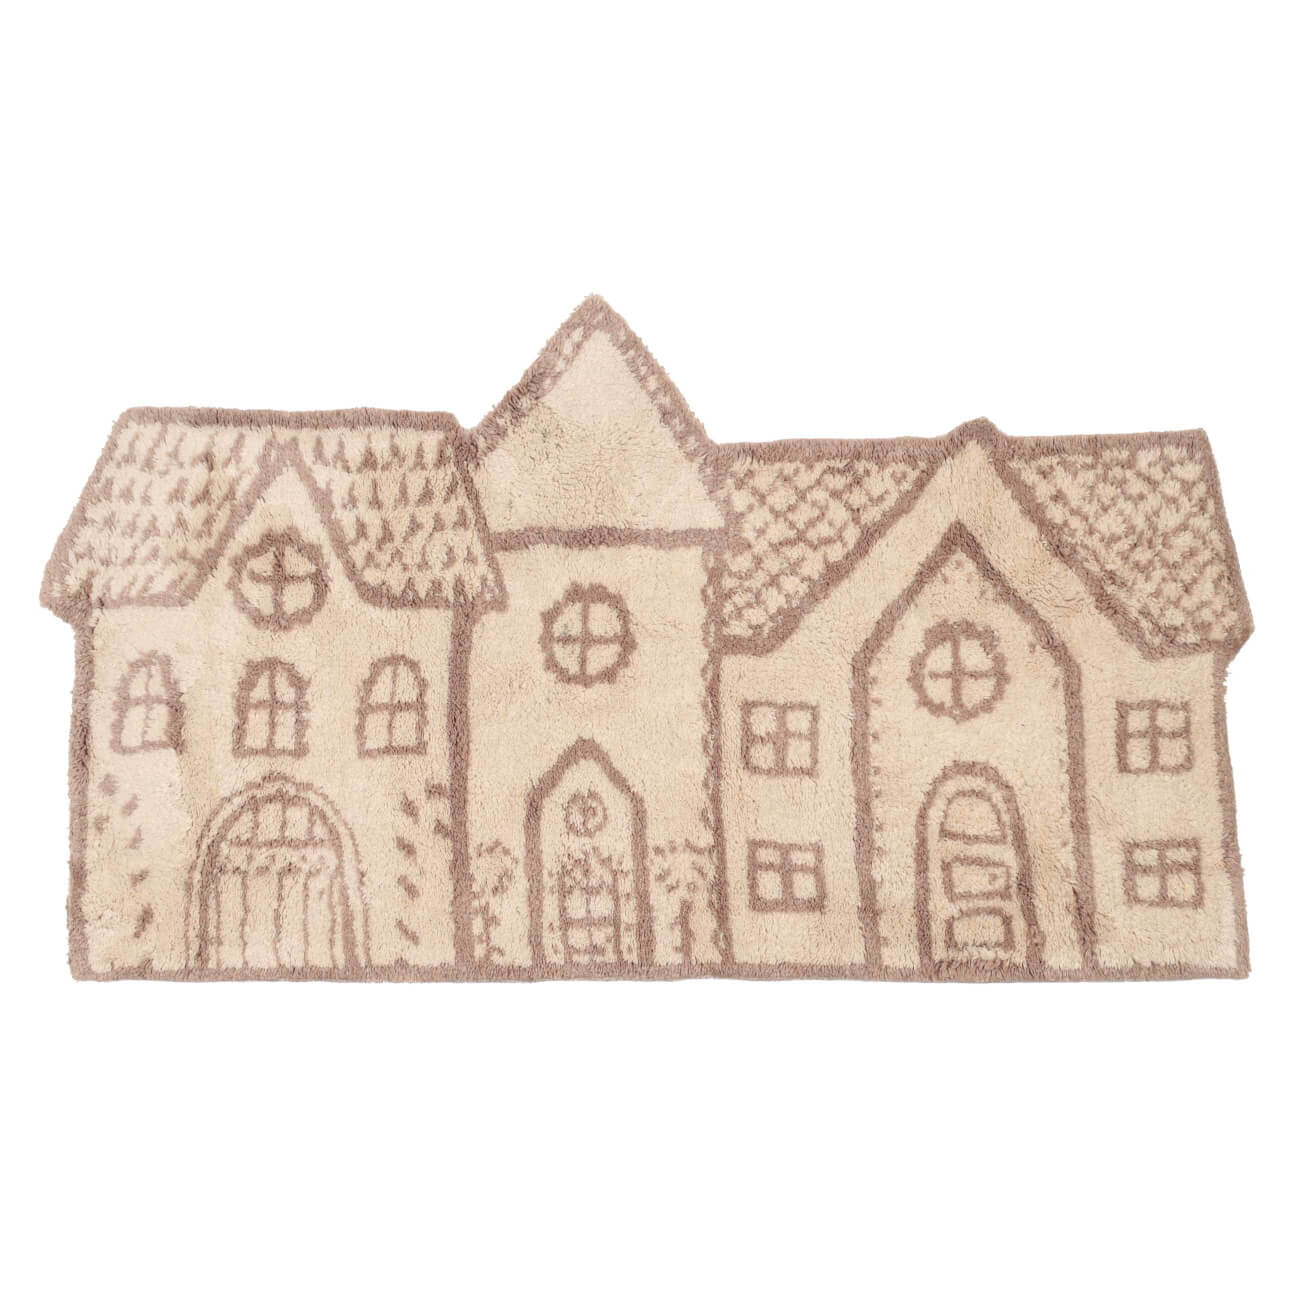 Коврик, 50x80 см, полиэстер, бежево-коричневый, Дома, Frosty sparks - фото 1